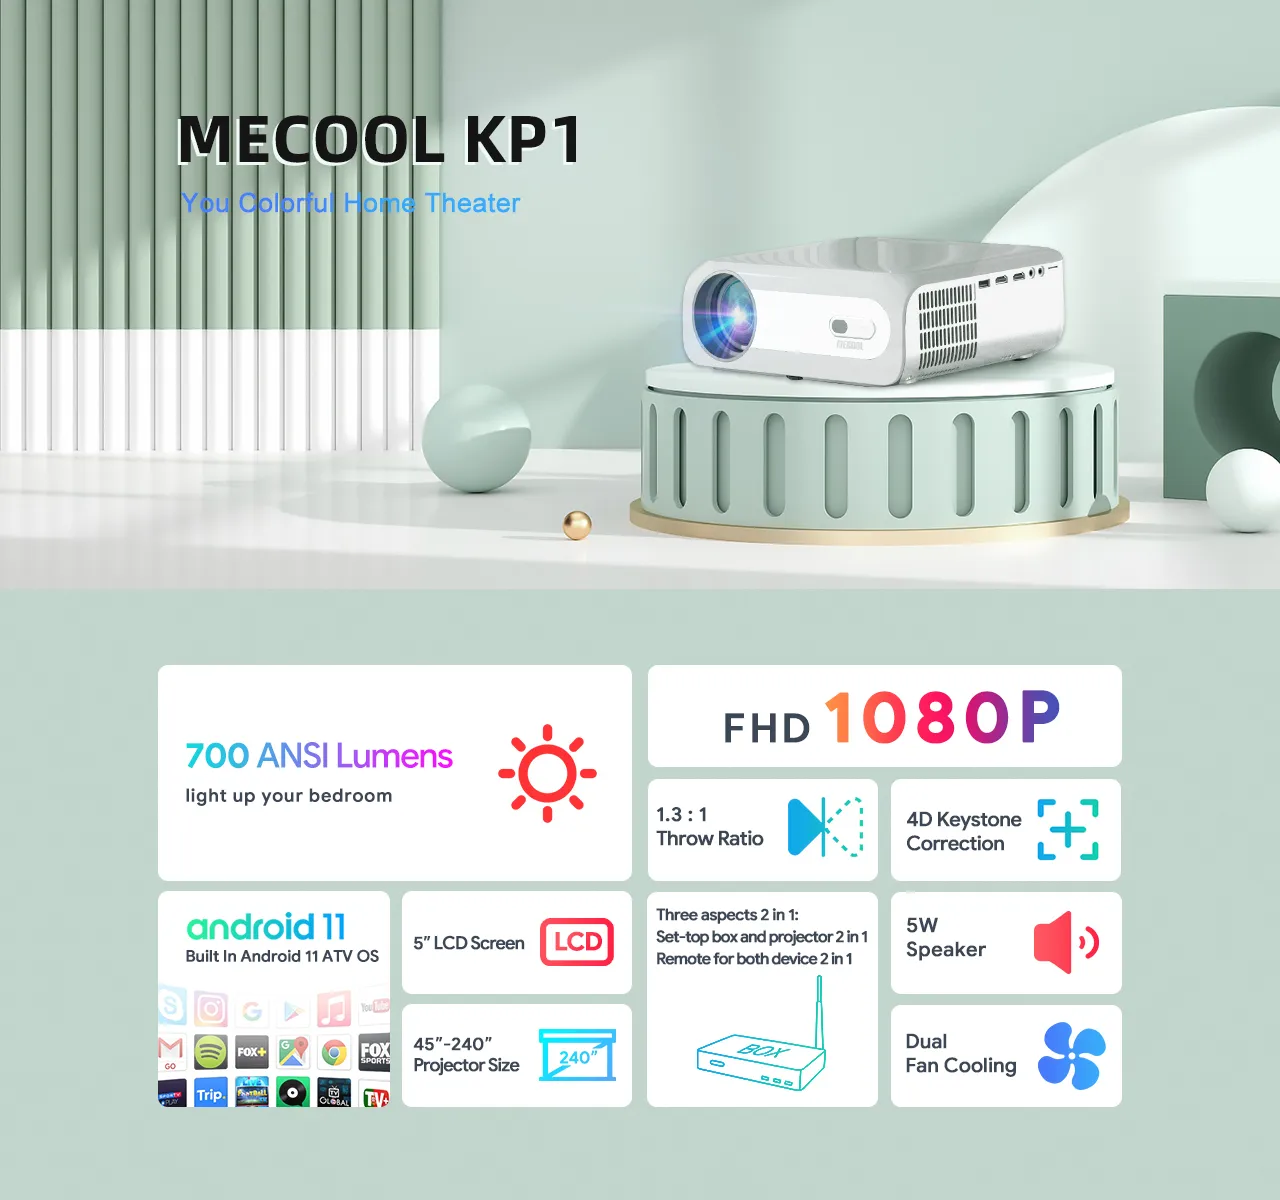 MECOOL KP1 Smart Projector